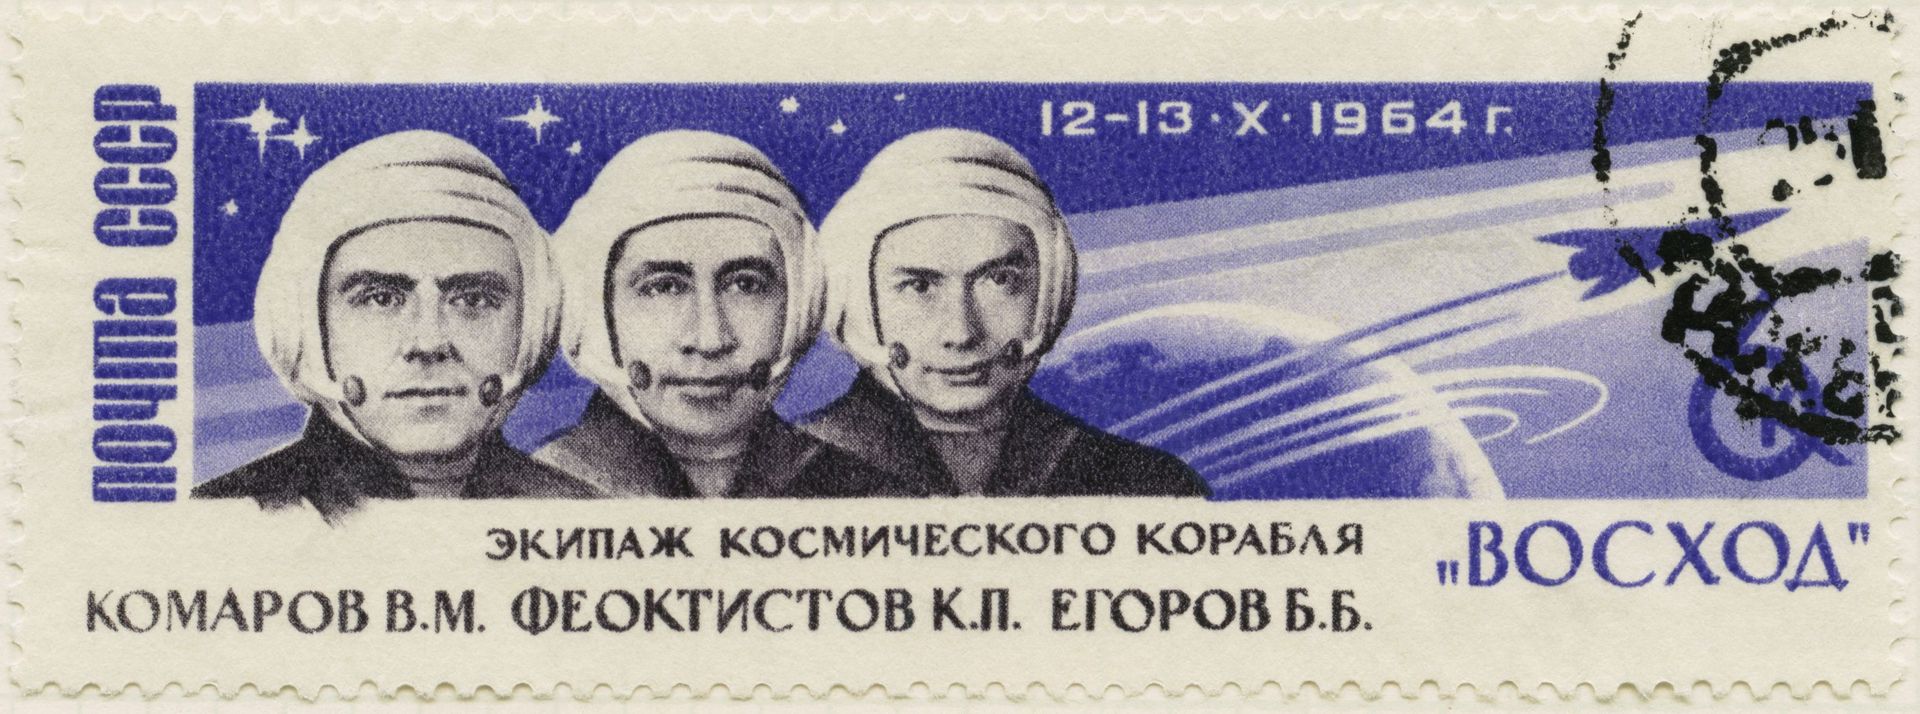 Cosmonautes soviétiques Vladimir Mikhaïlovitch Komarov, Konstantin Petrovich Feoktistov, Boris Borisovich Yegorov, sur un timbre-poste commémoratif, Union soviétique, 1964